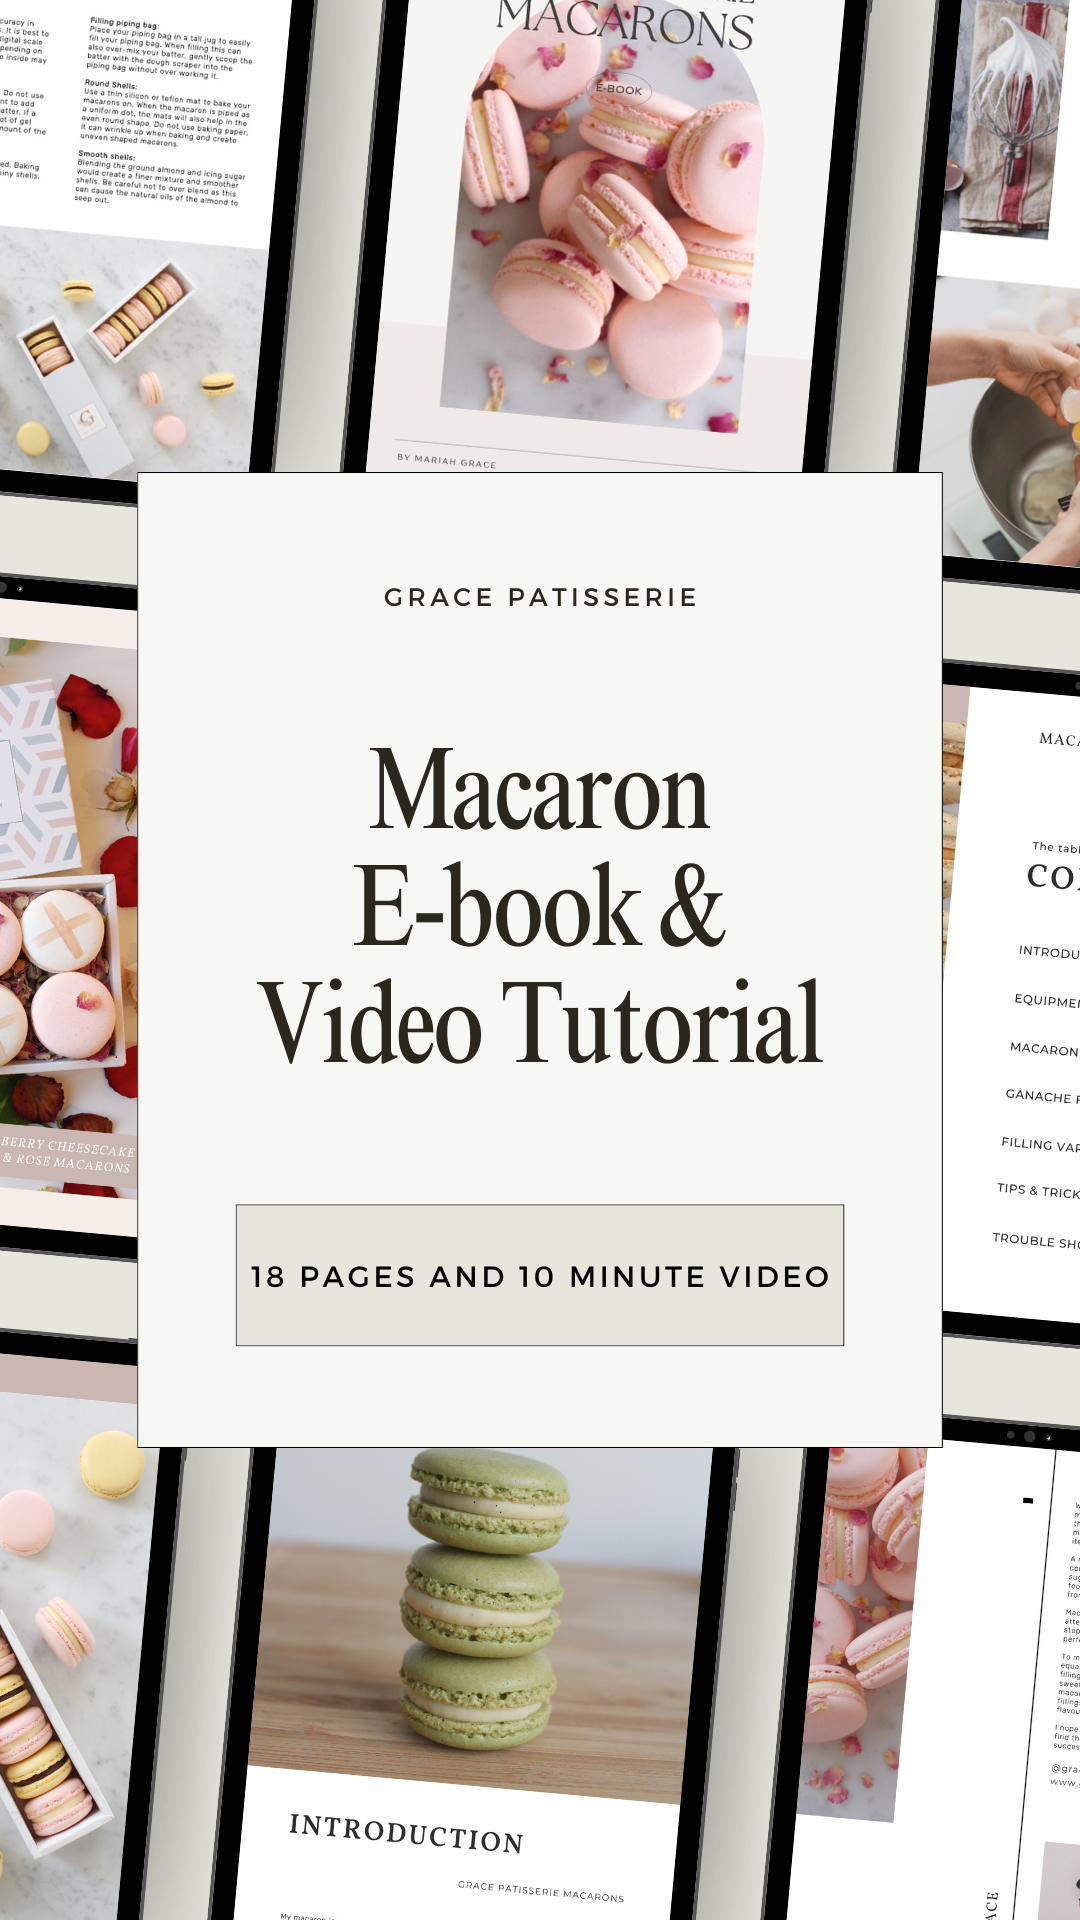 Grace Patisserie Macaron E-book & Video Tutorial